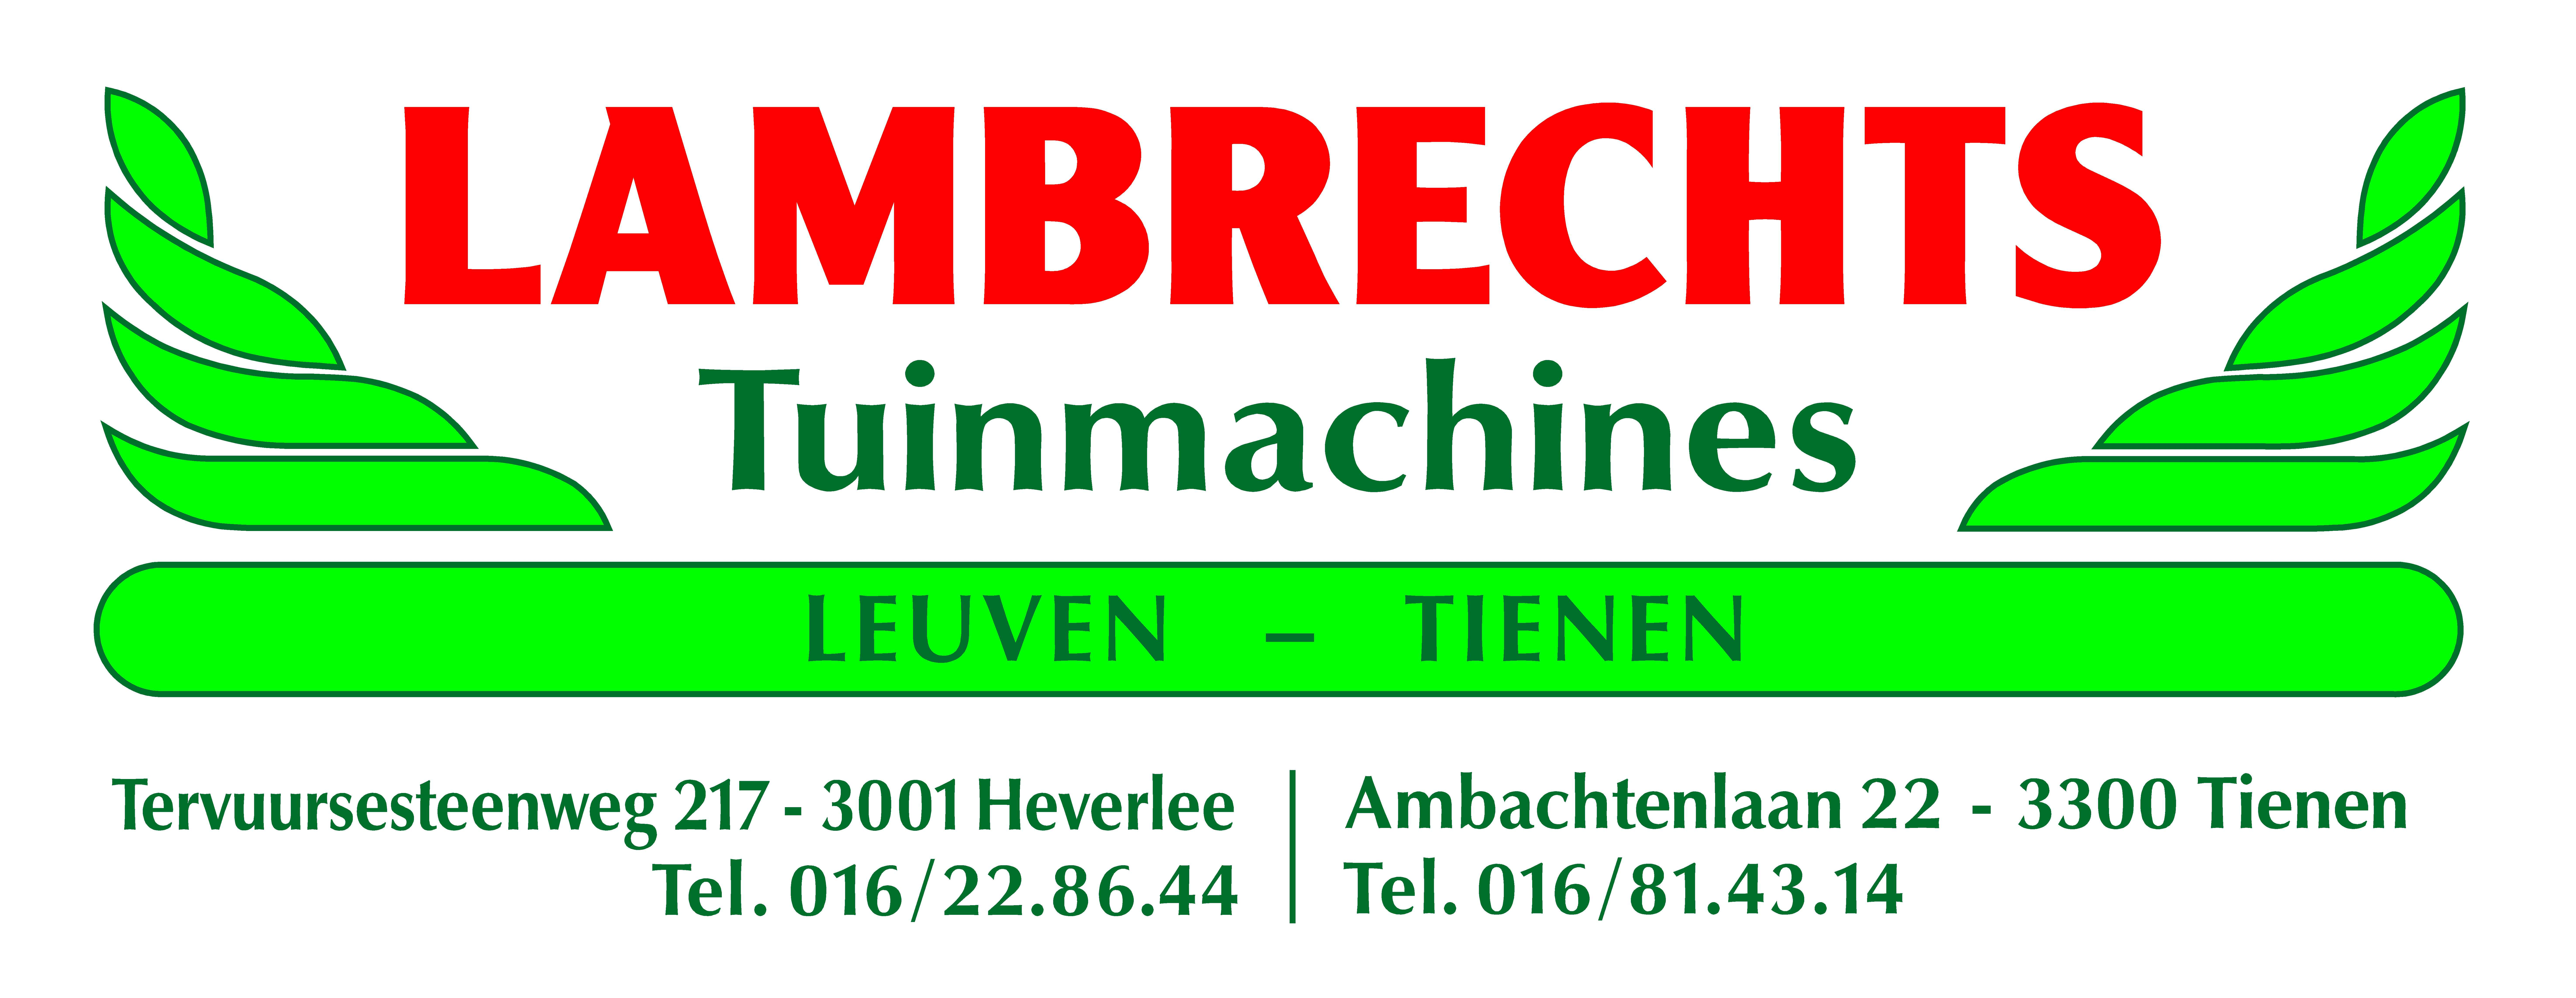 Lambrechts Tuinmachines Leuven